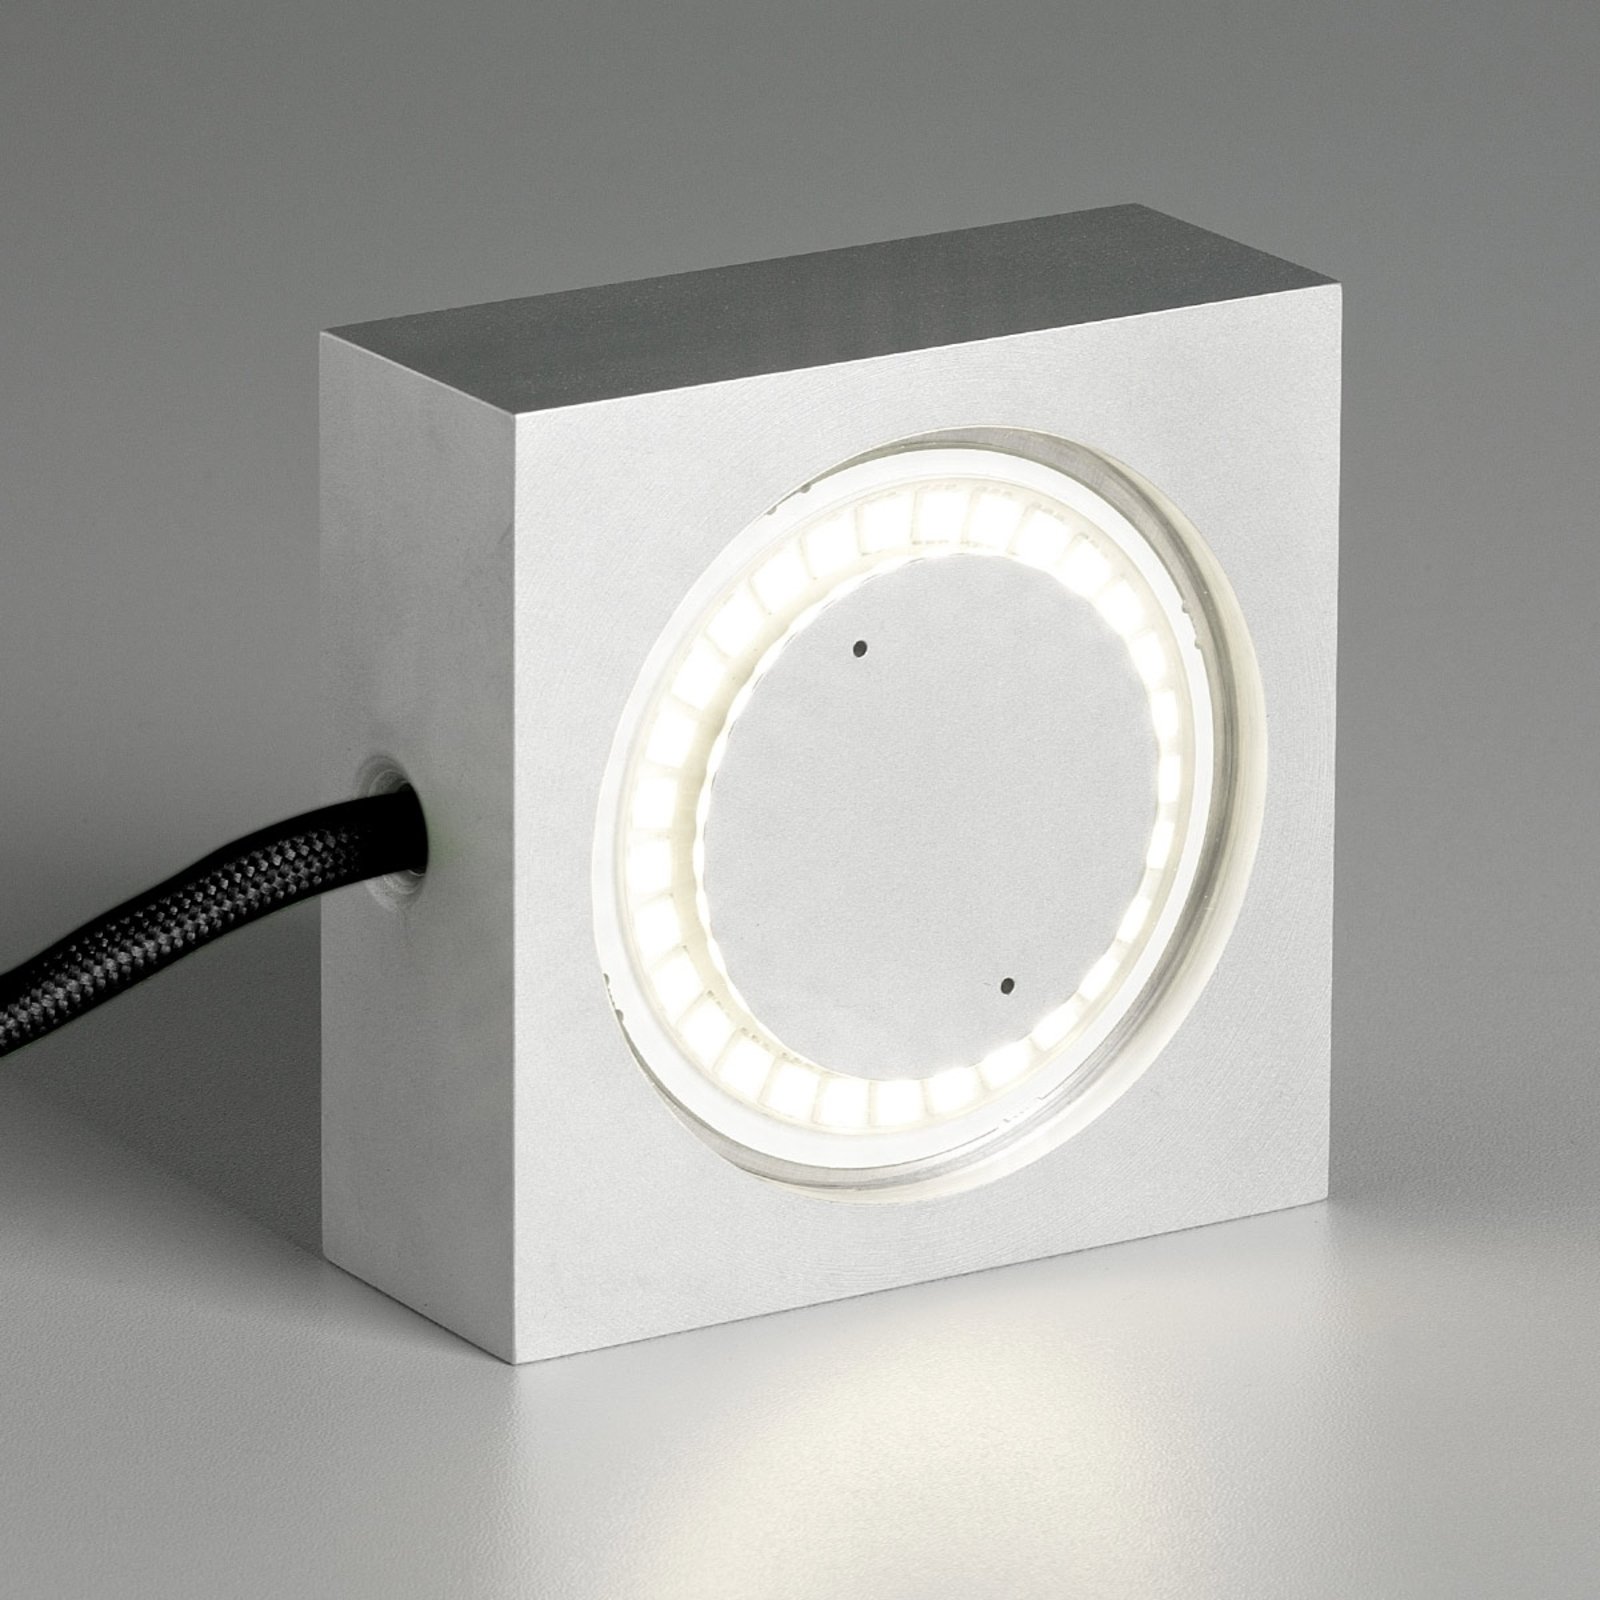 Square LED multipurpose lamp, black power cable